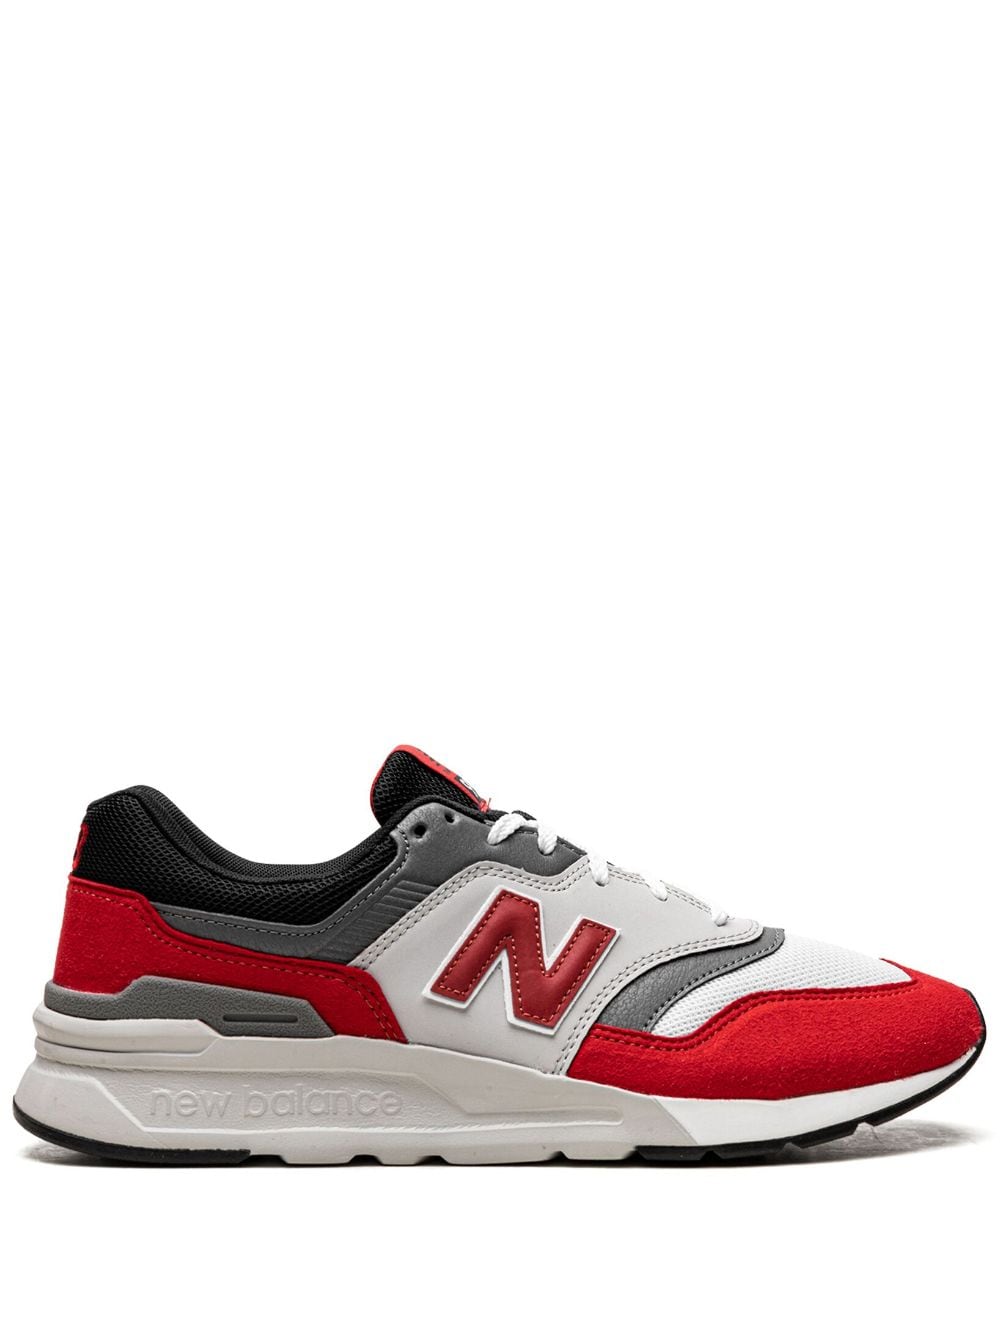 New Balance 997H "Red/Black" sneakers von New Balance